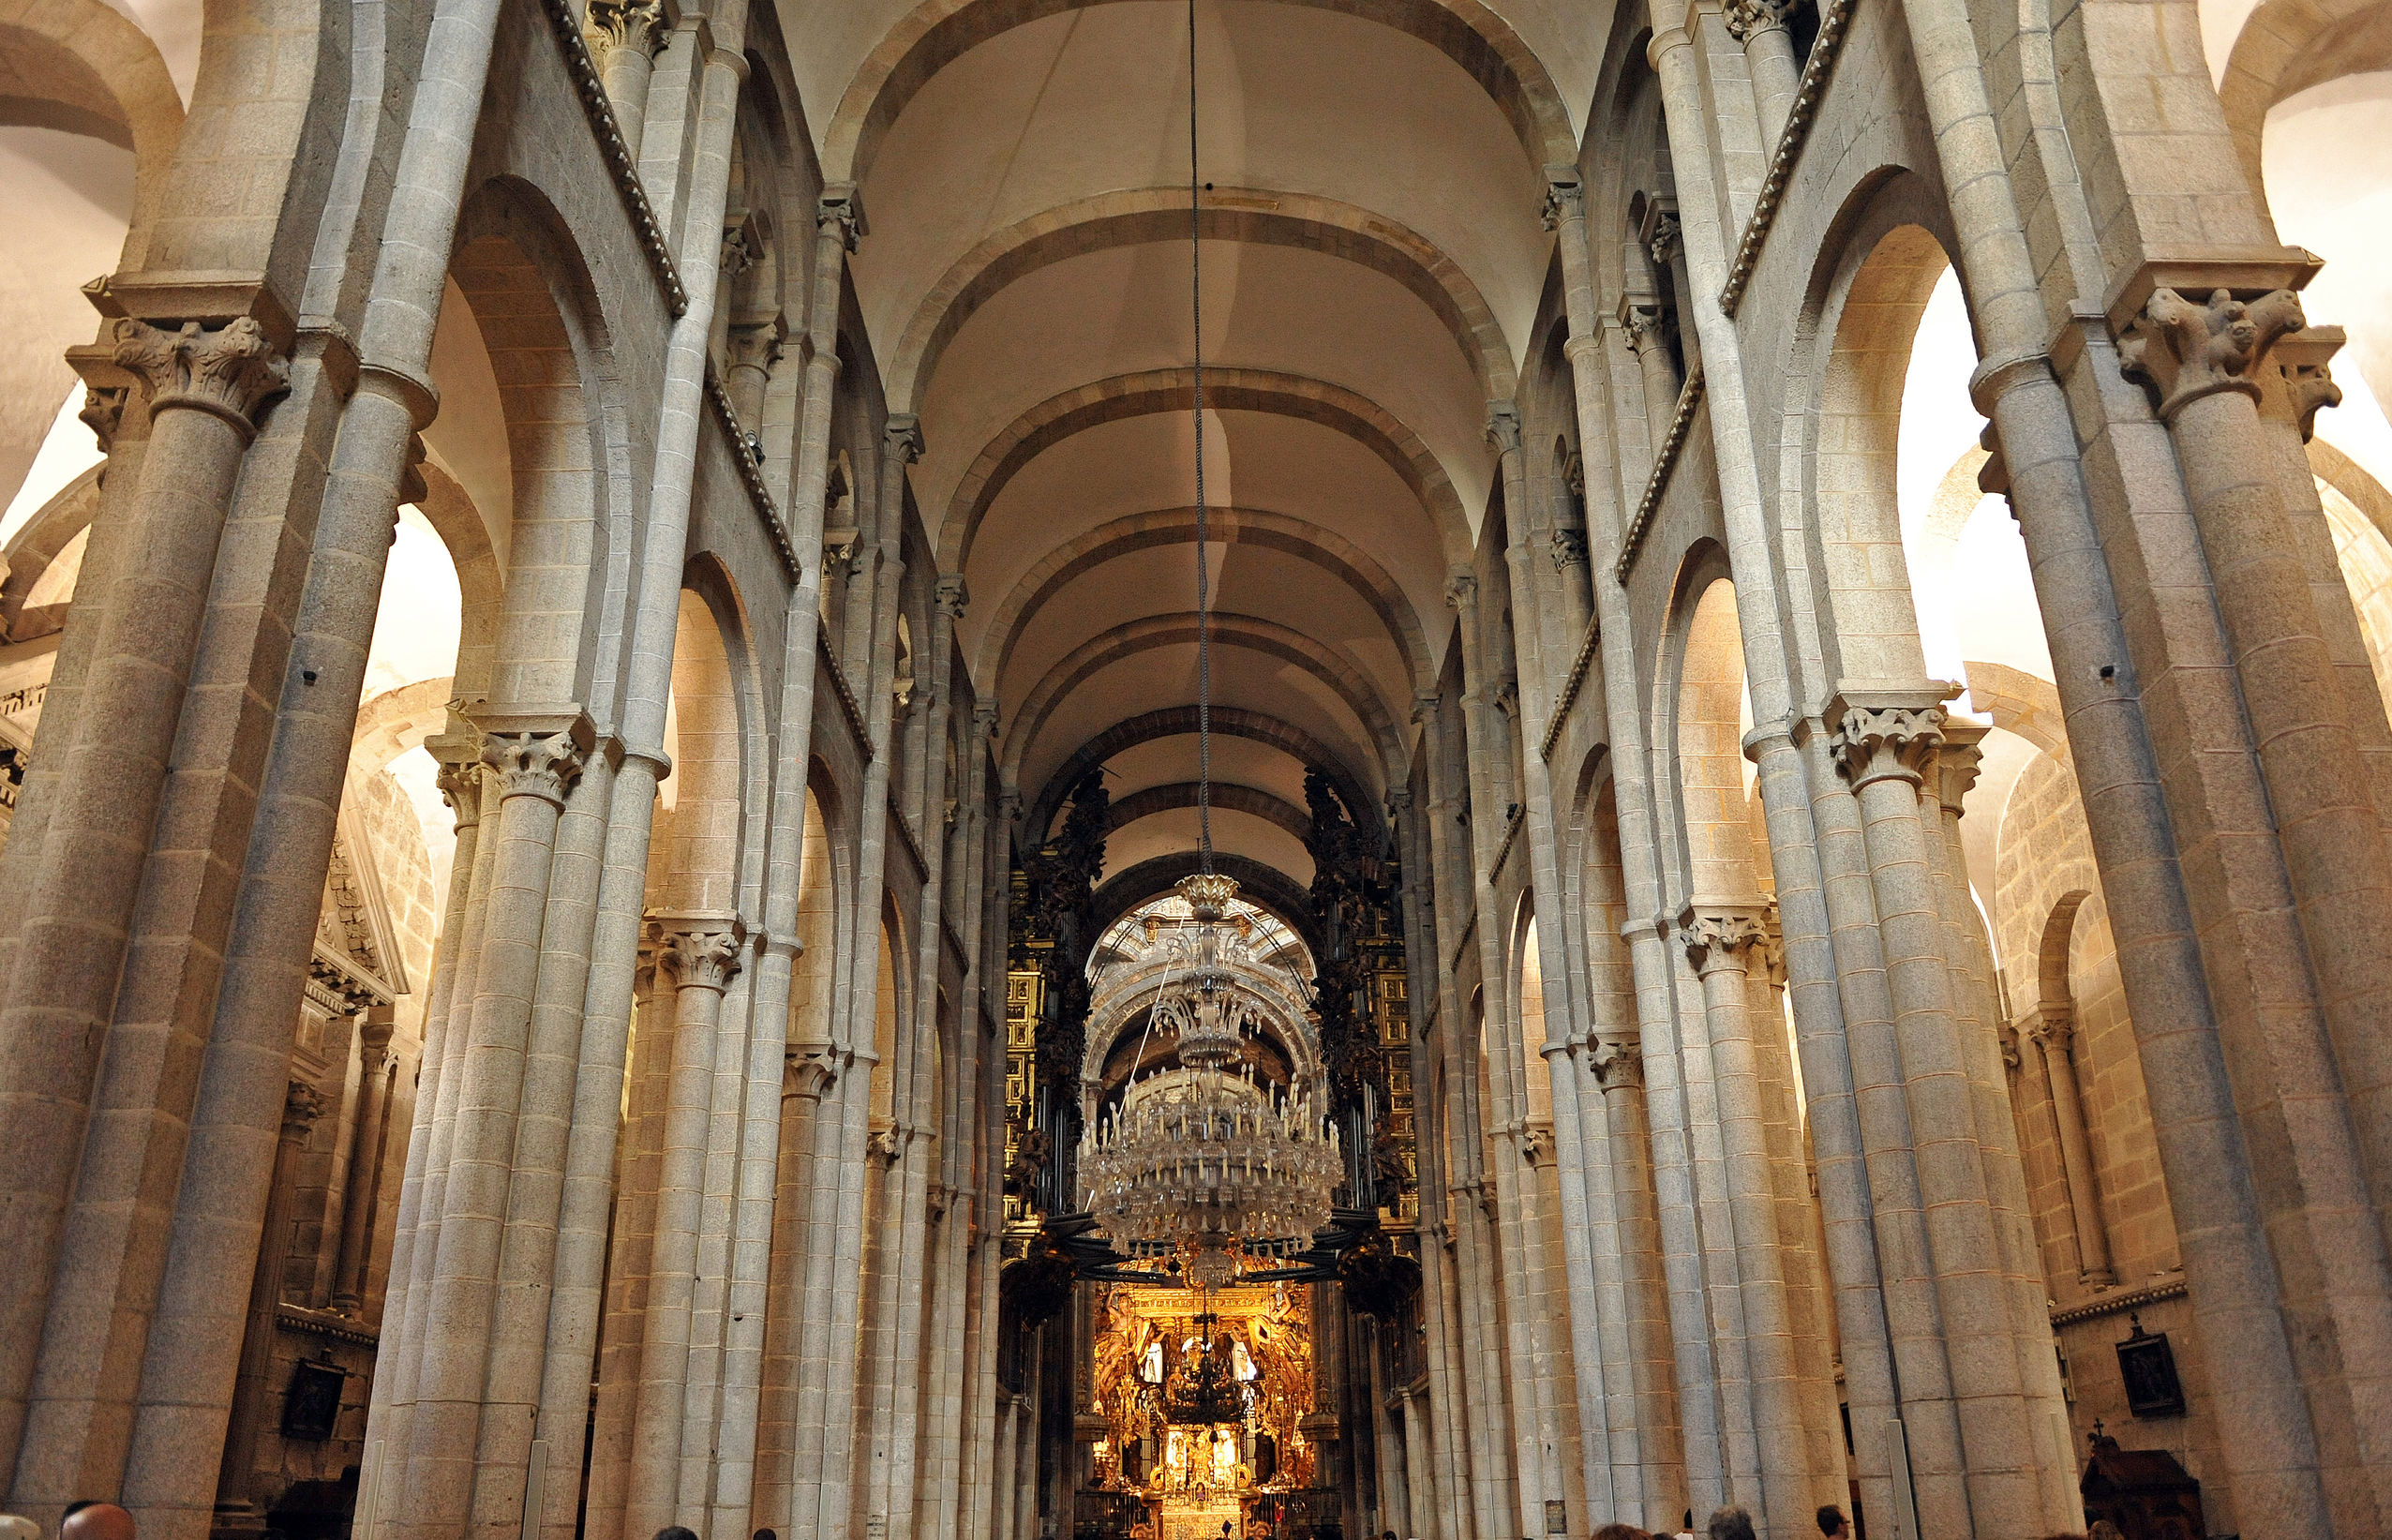 43110344 - inside the cathedral of santiago de compostela, spain